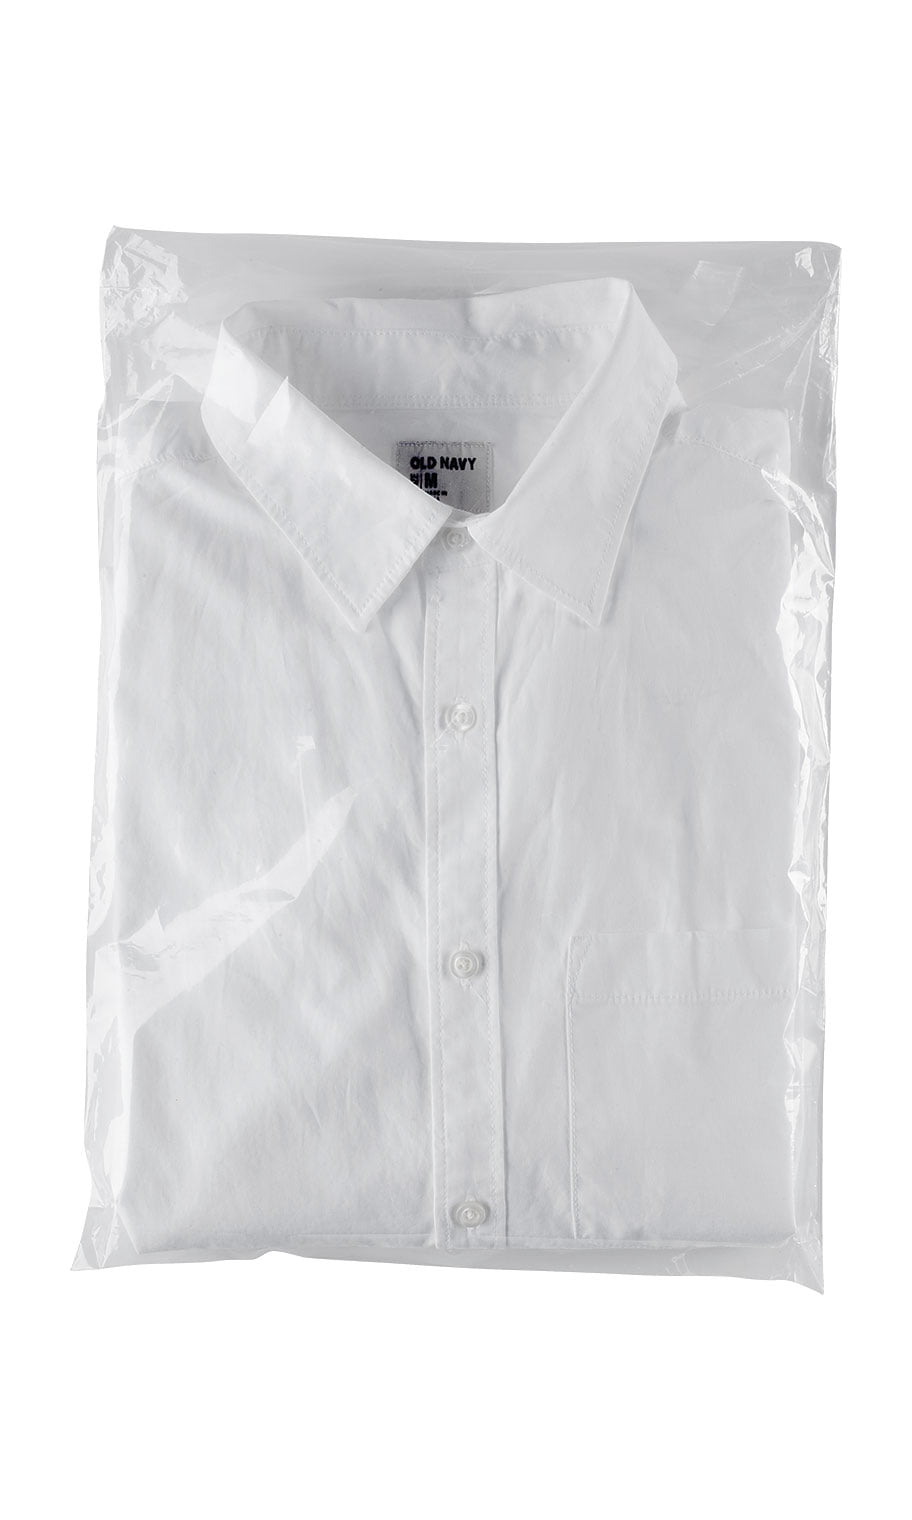 Mainetti 5075, 12 Clear Plastic, Children's Shirt Top Dress